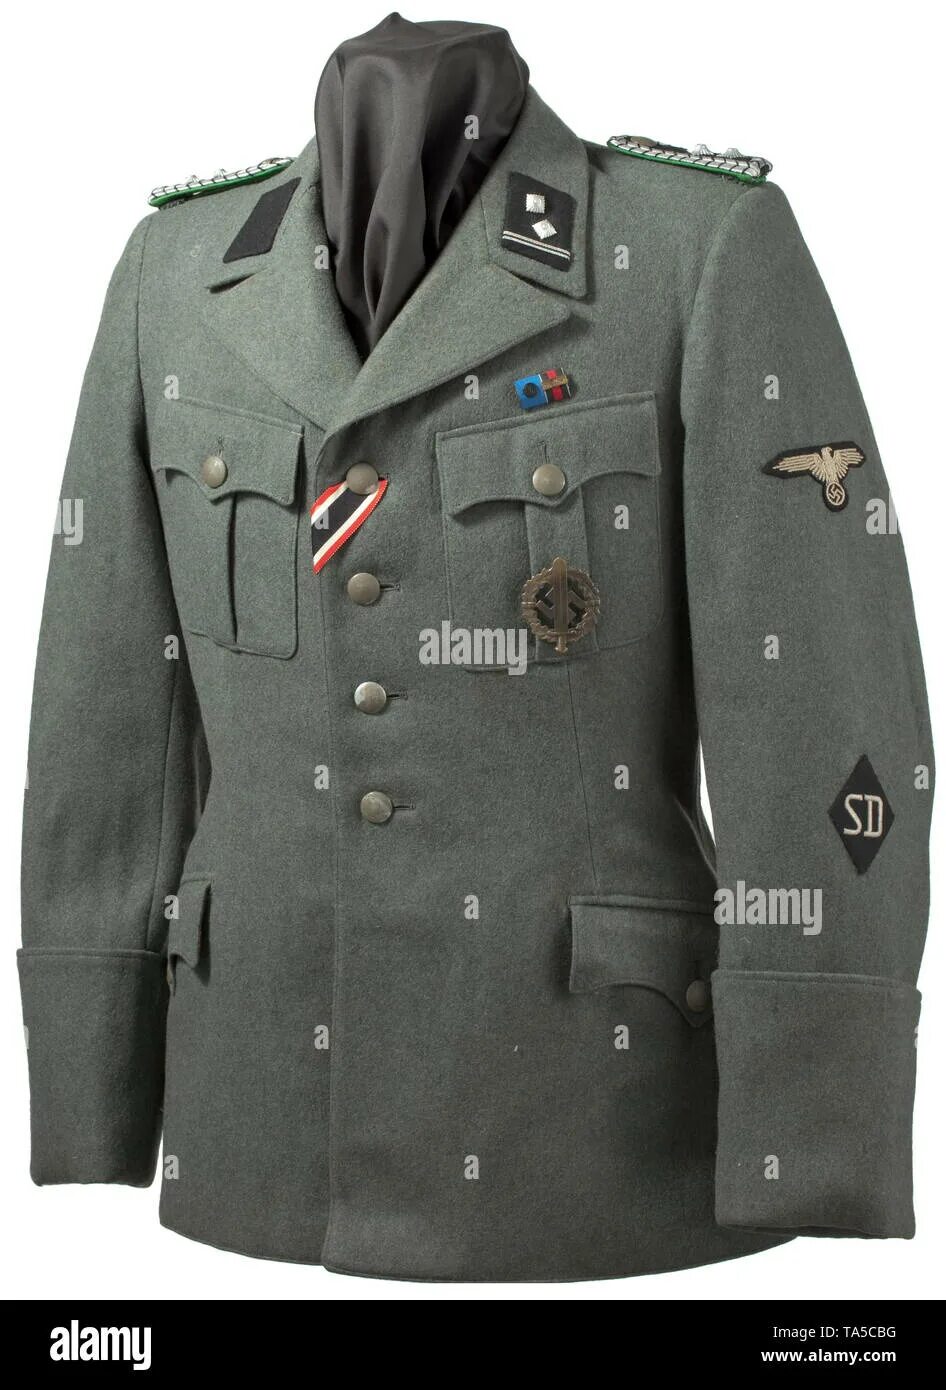 Китель немецкого офицера SD ww2. Униформа офицера SD Waffen SS ww2. Китель Ваффен СС. SD Waffen SS форма.